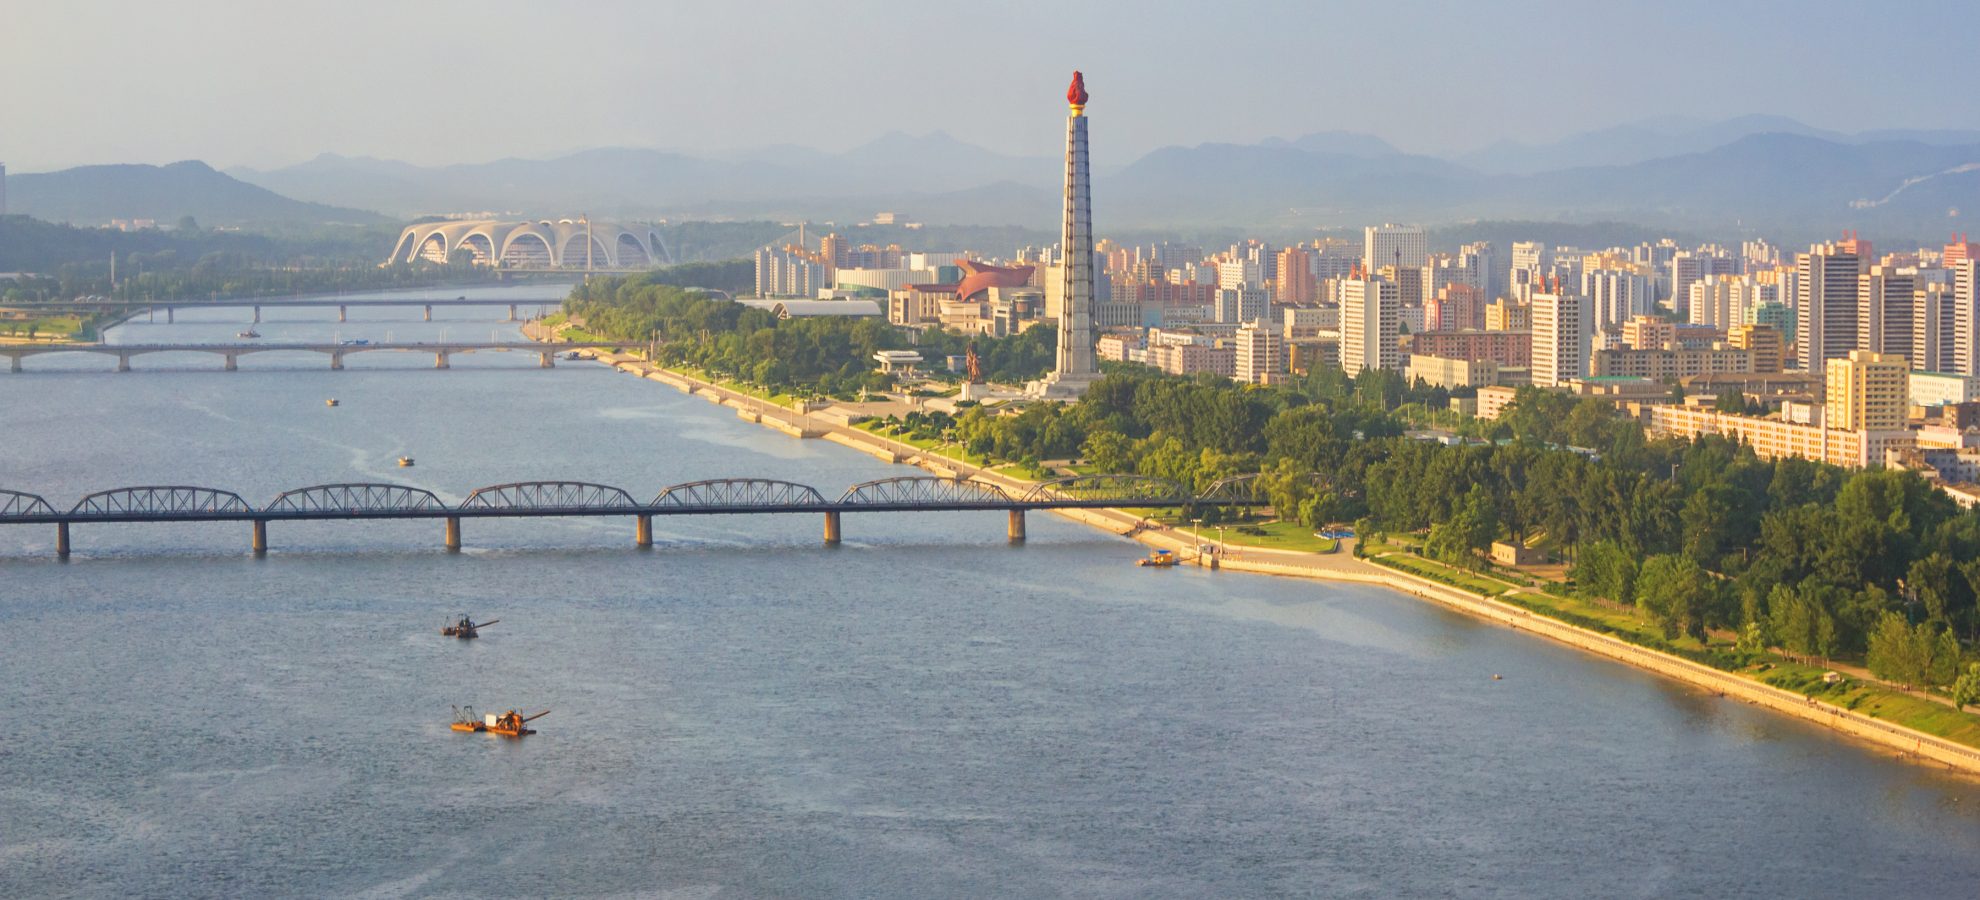 Skyline-van-Pyongyang-Noord-Korea